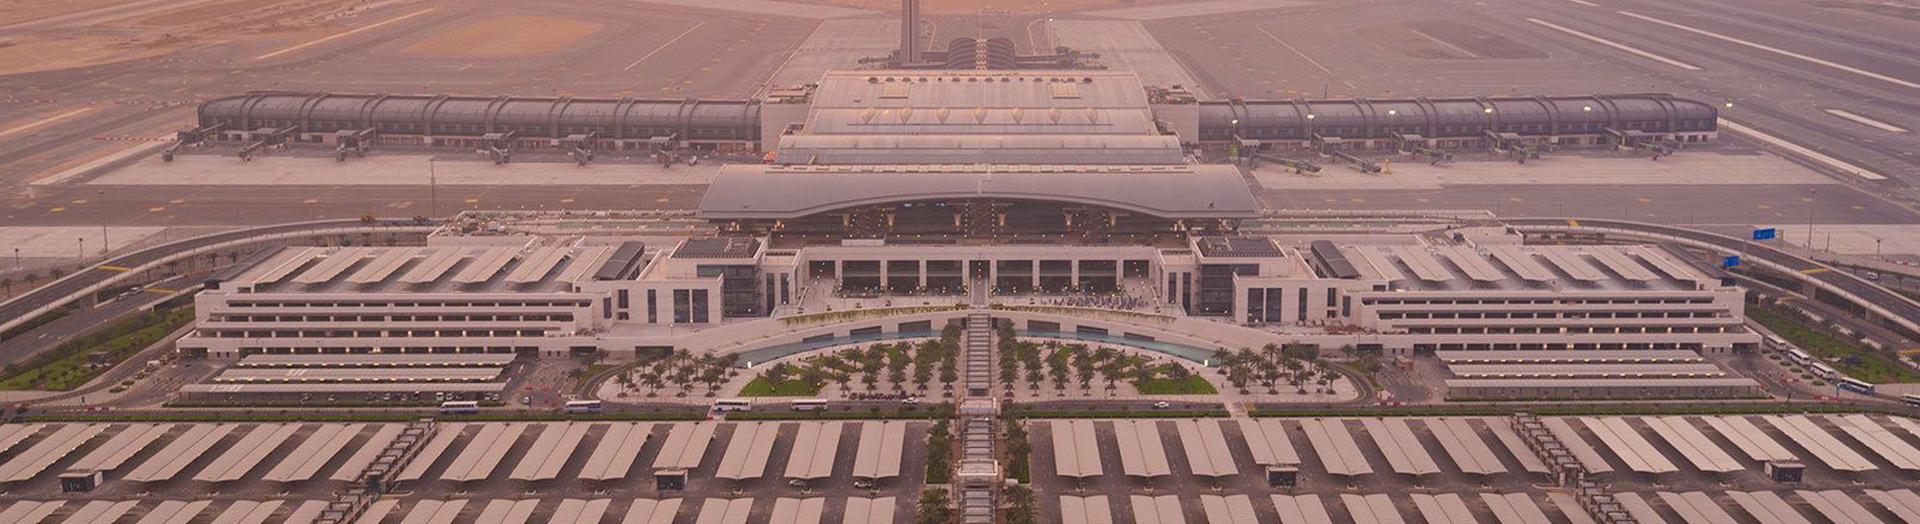 Oman Airport Management Company